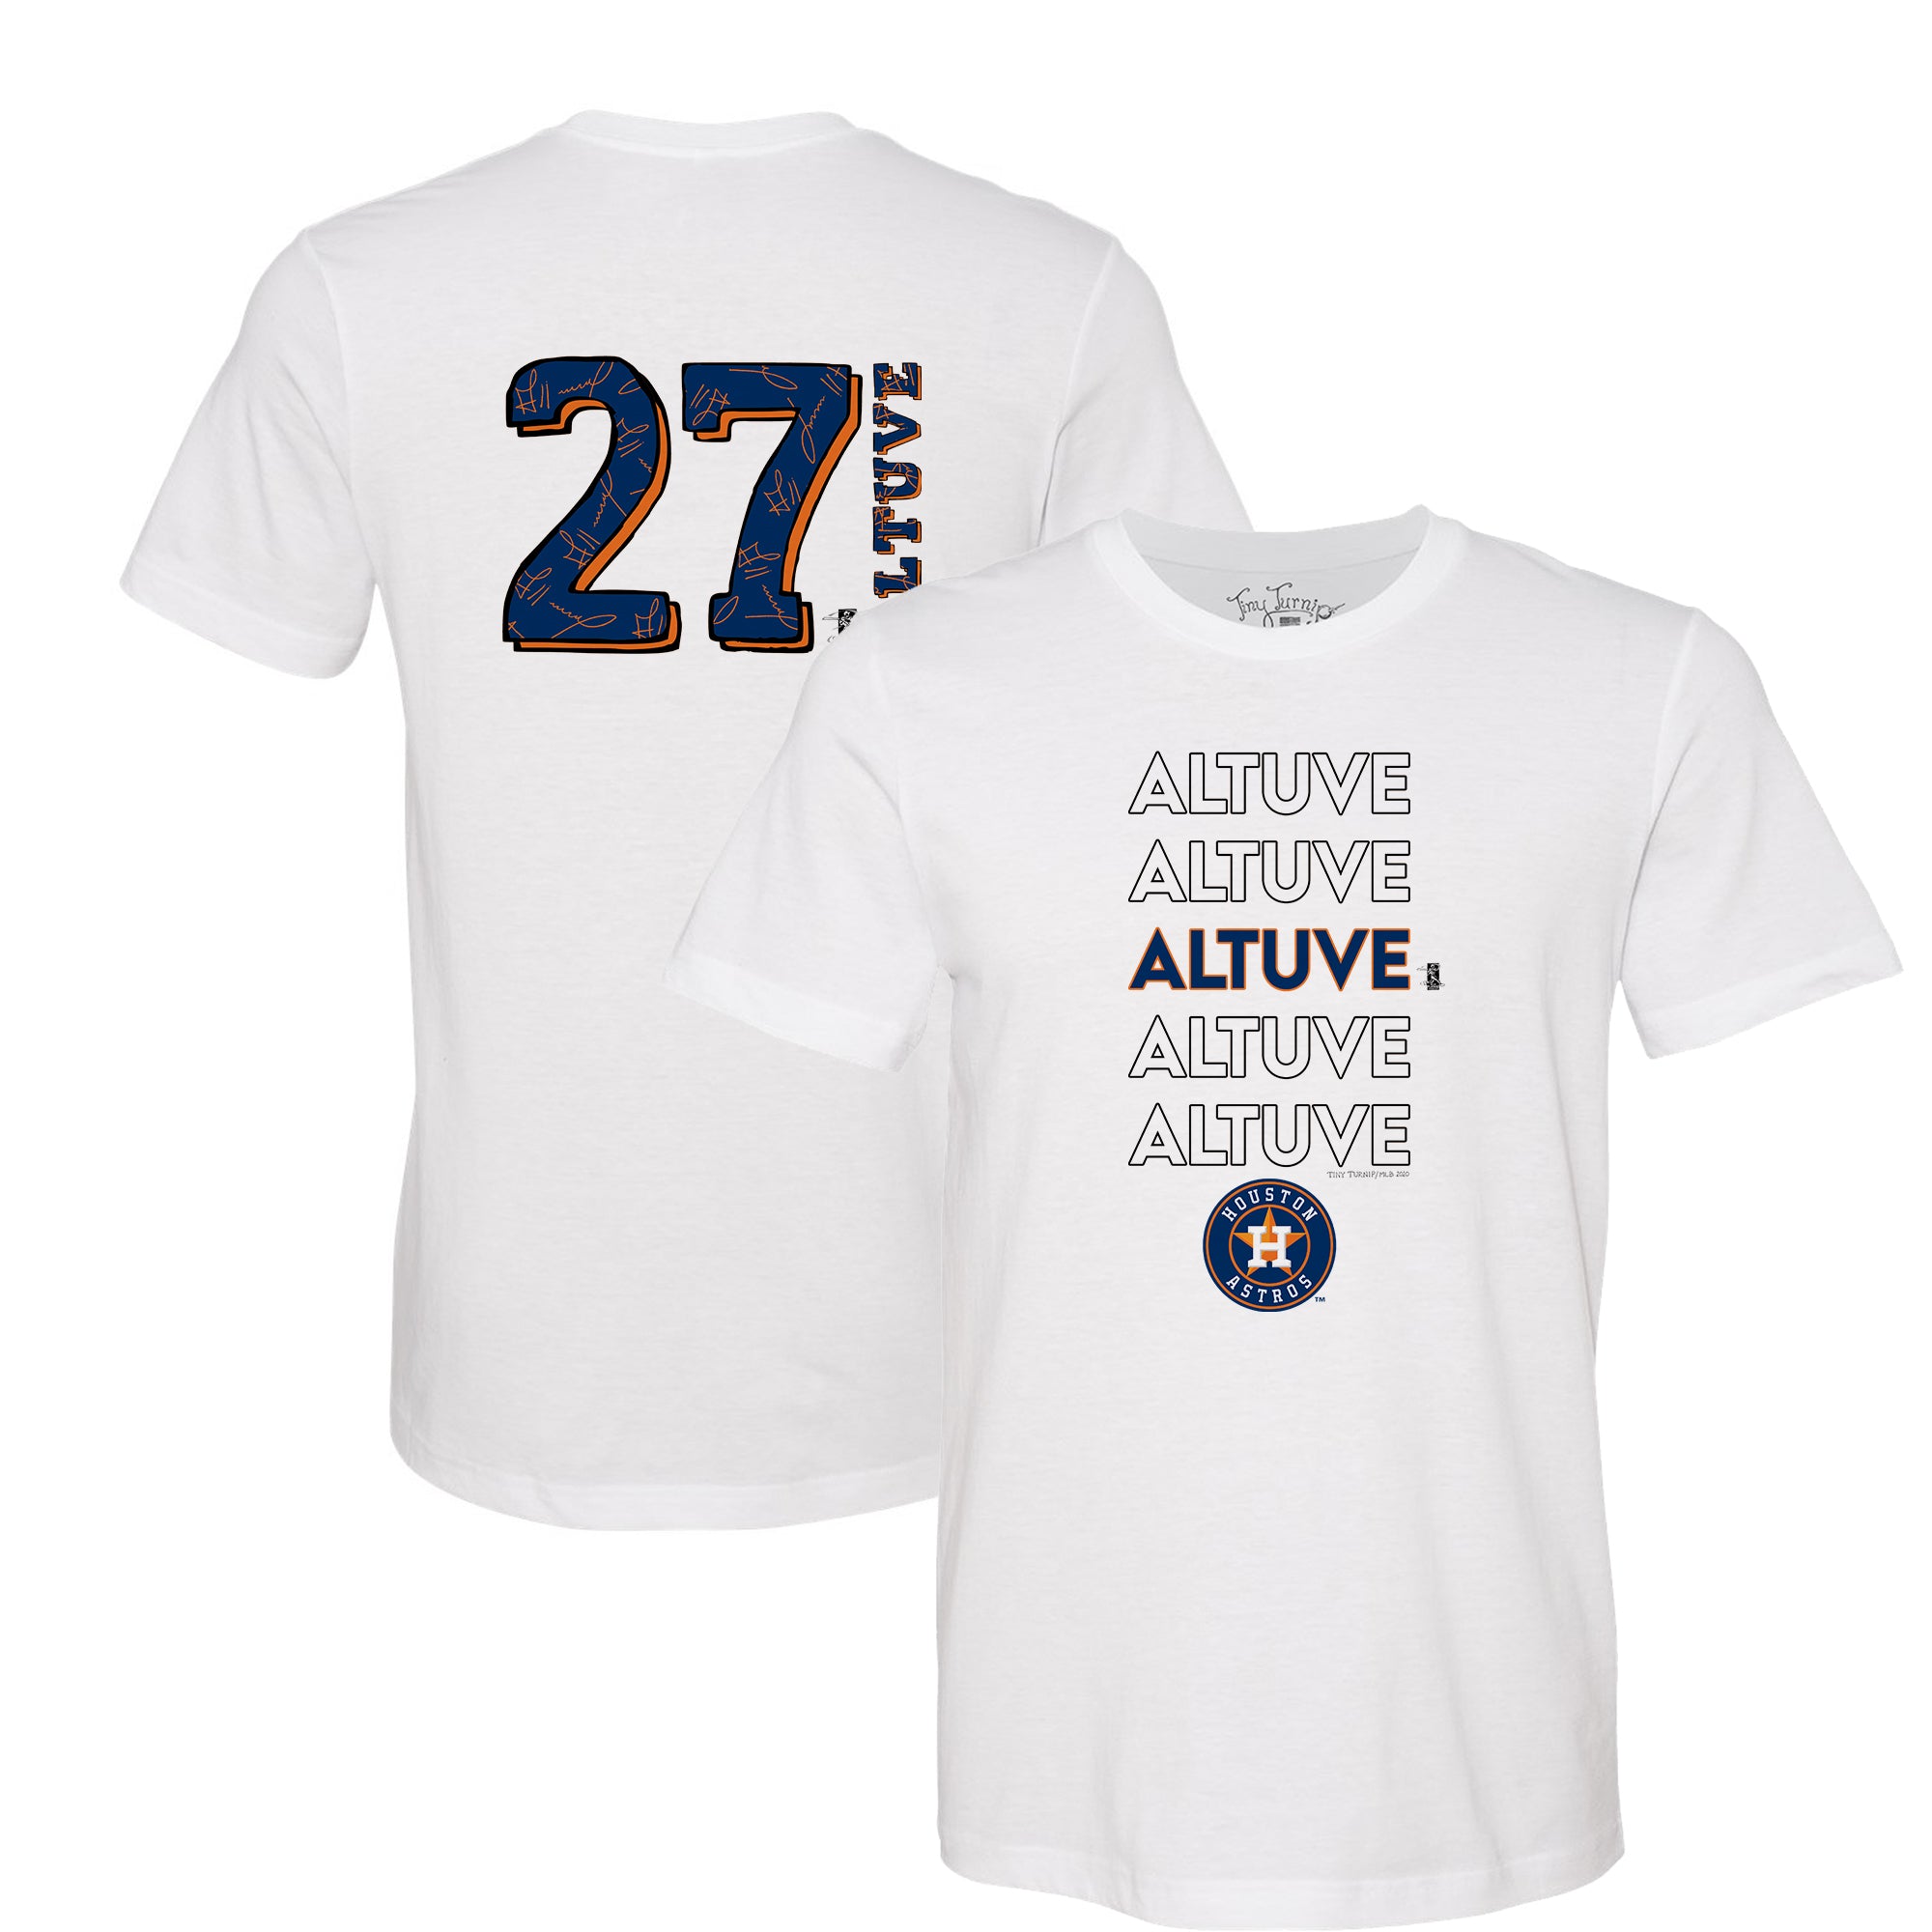 Jose Altuve Walk Off Celebration Kids T-Shirt for Sale by RatTrapTees